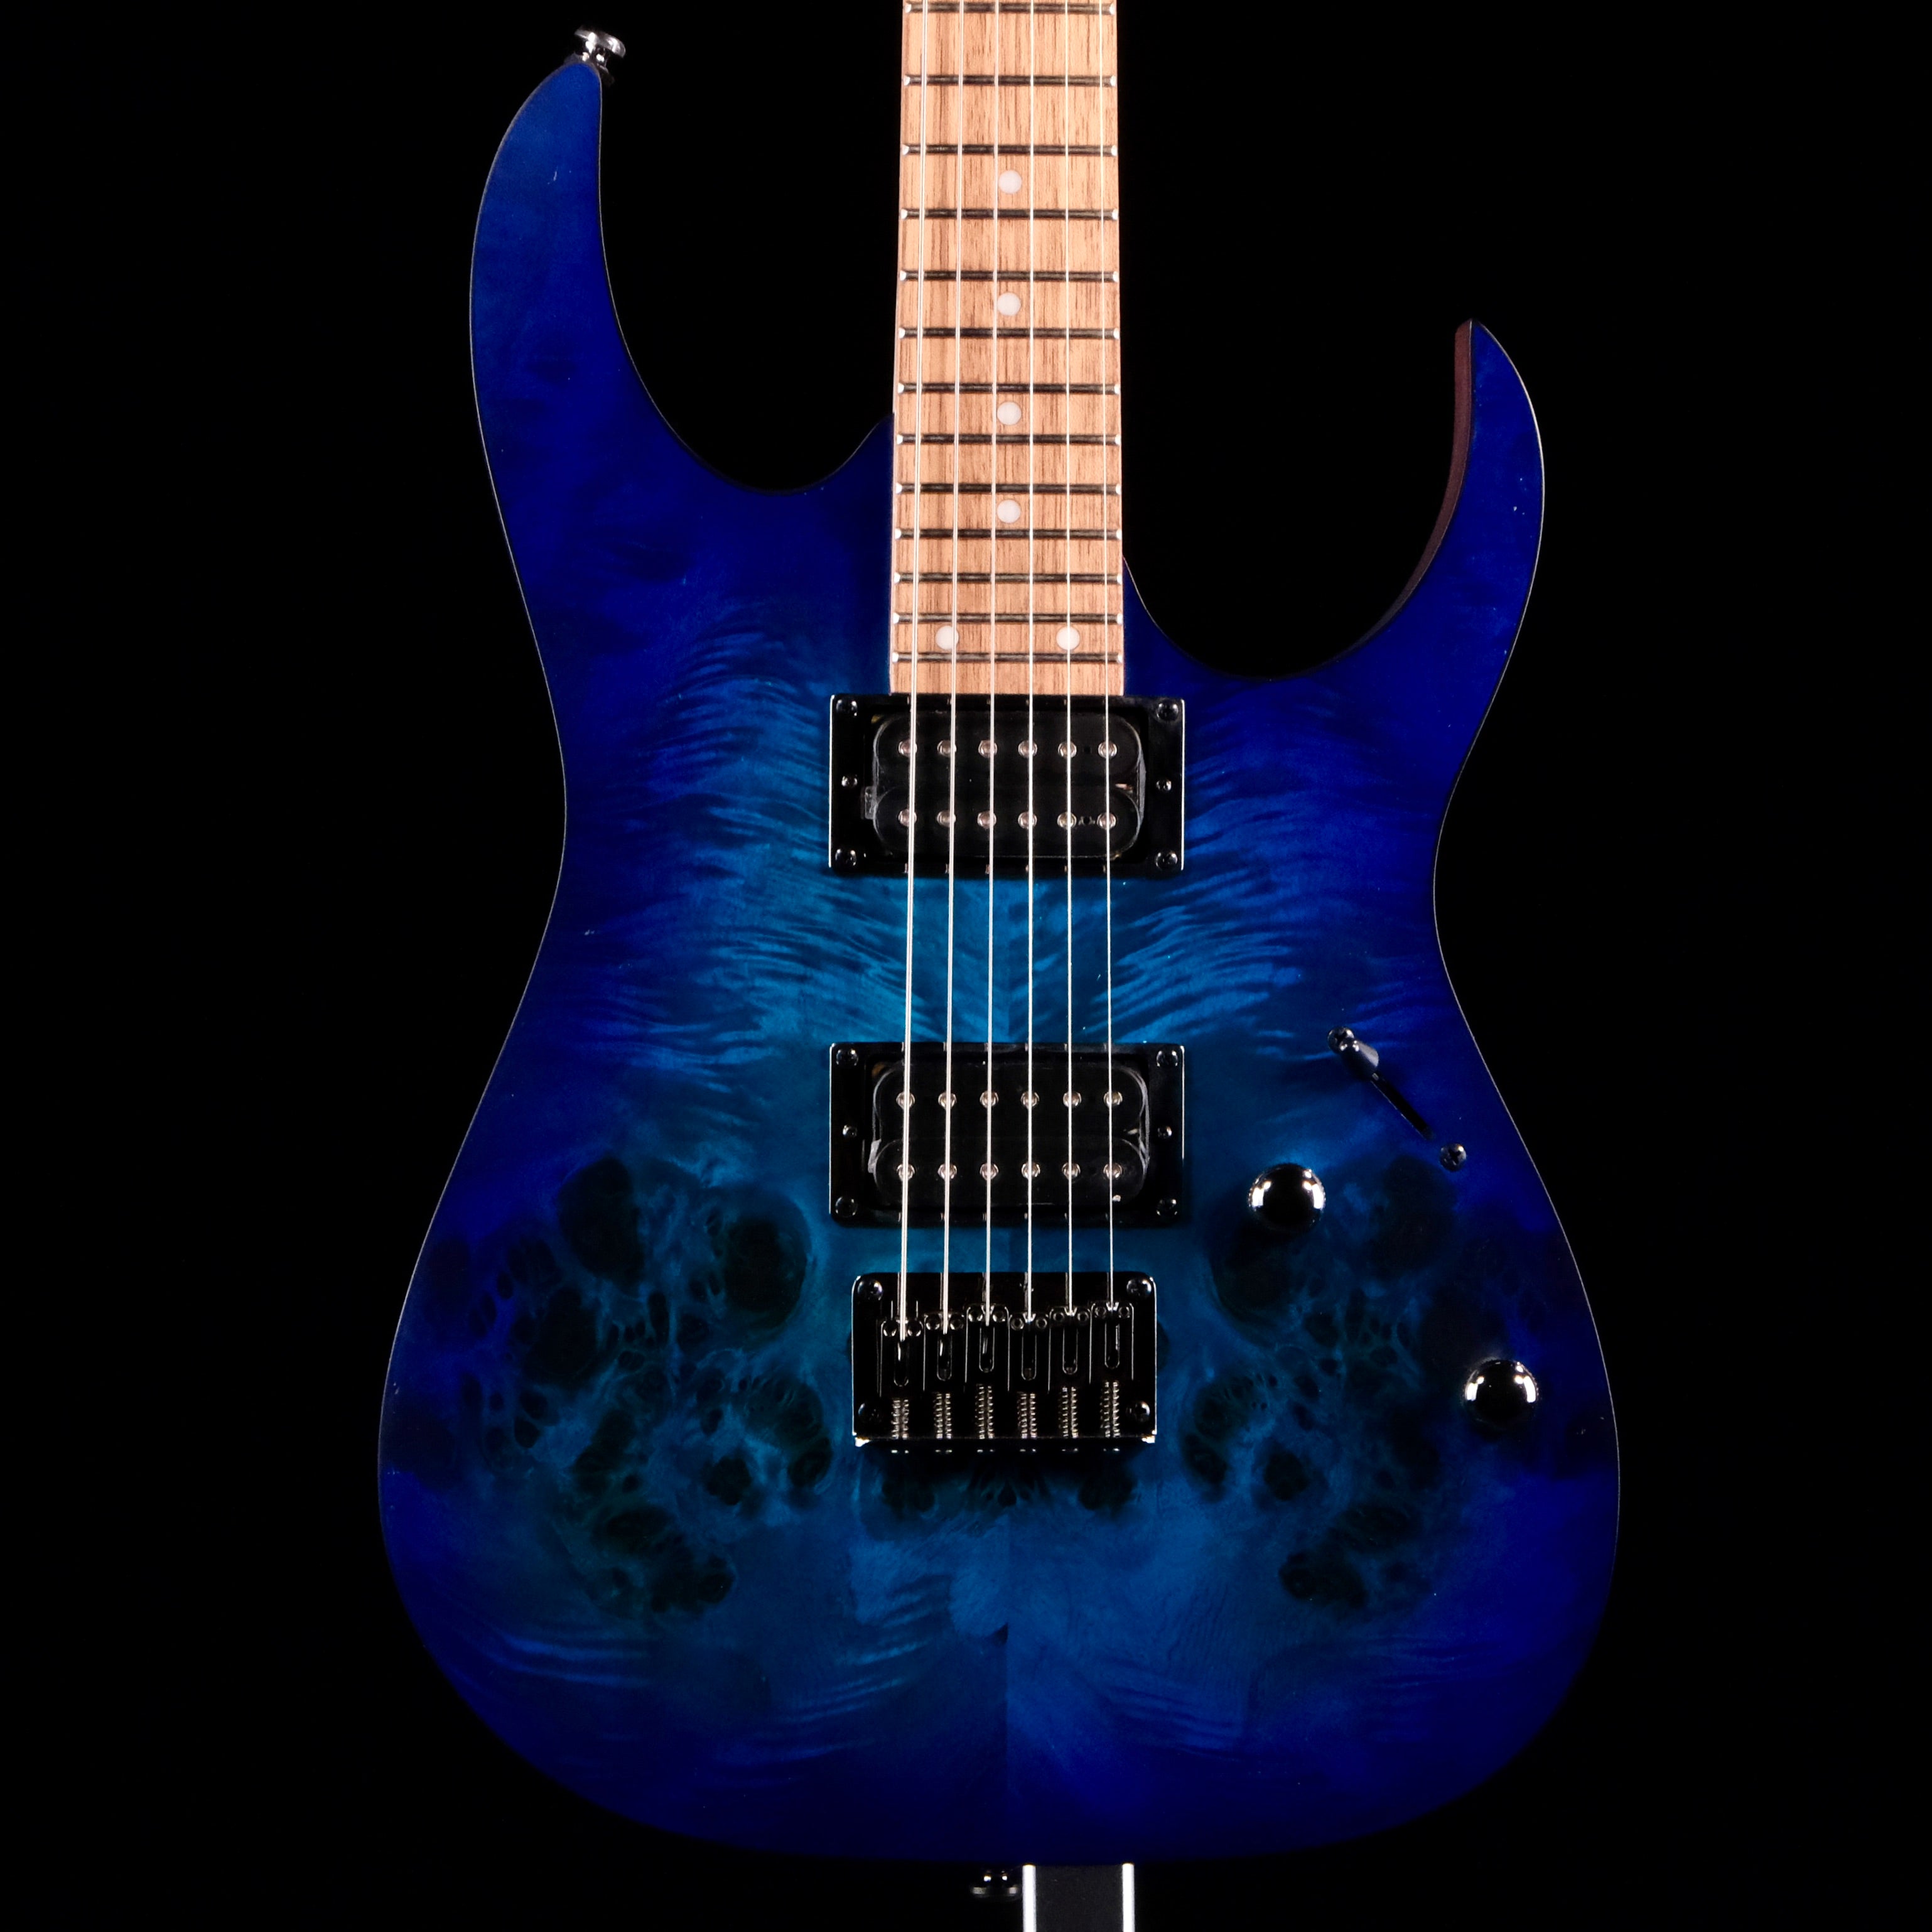 Palen　Sapphire　Ibanez　$399.99　Guitar　RG421PB　Music　Electric　Blue　Flat　Ibanez